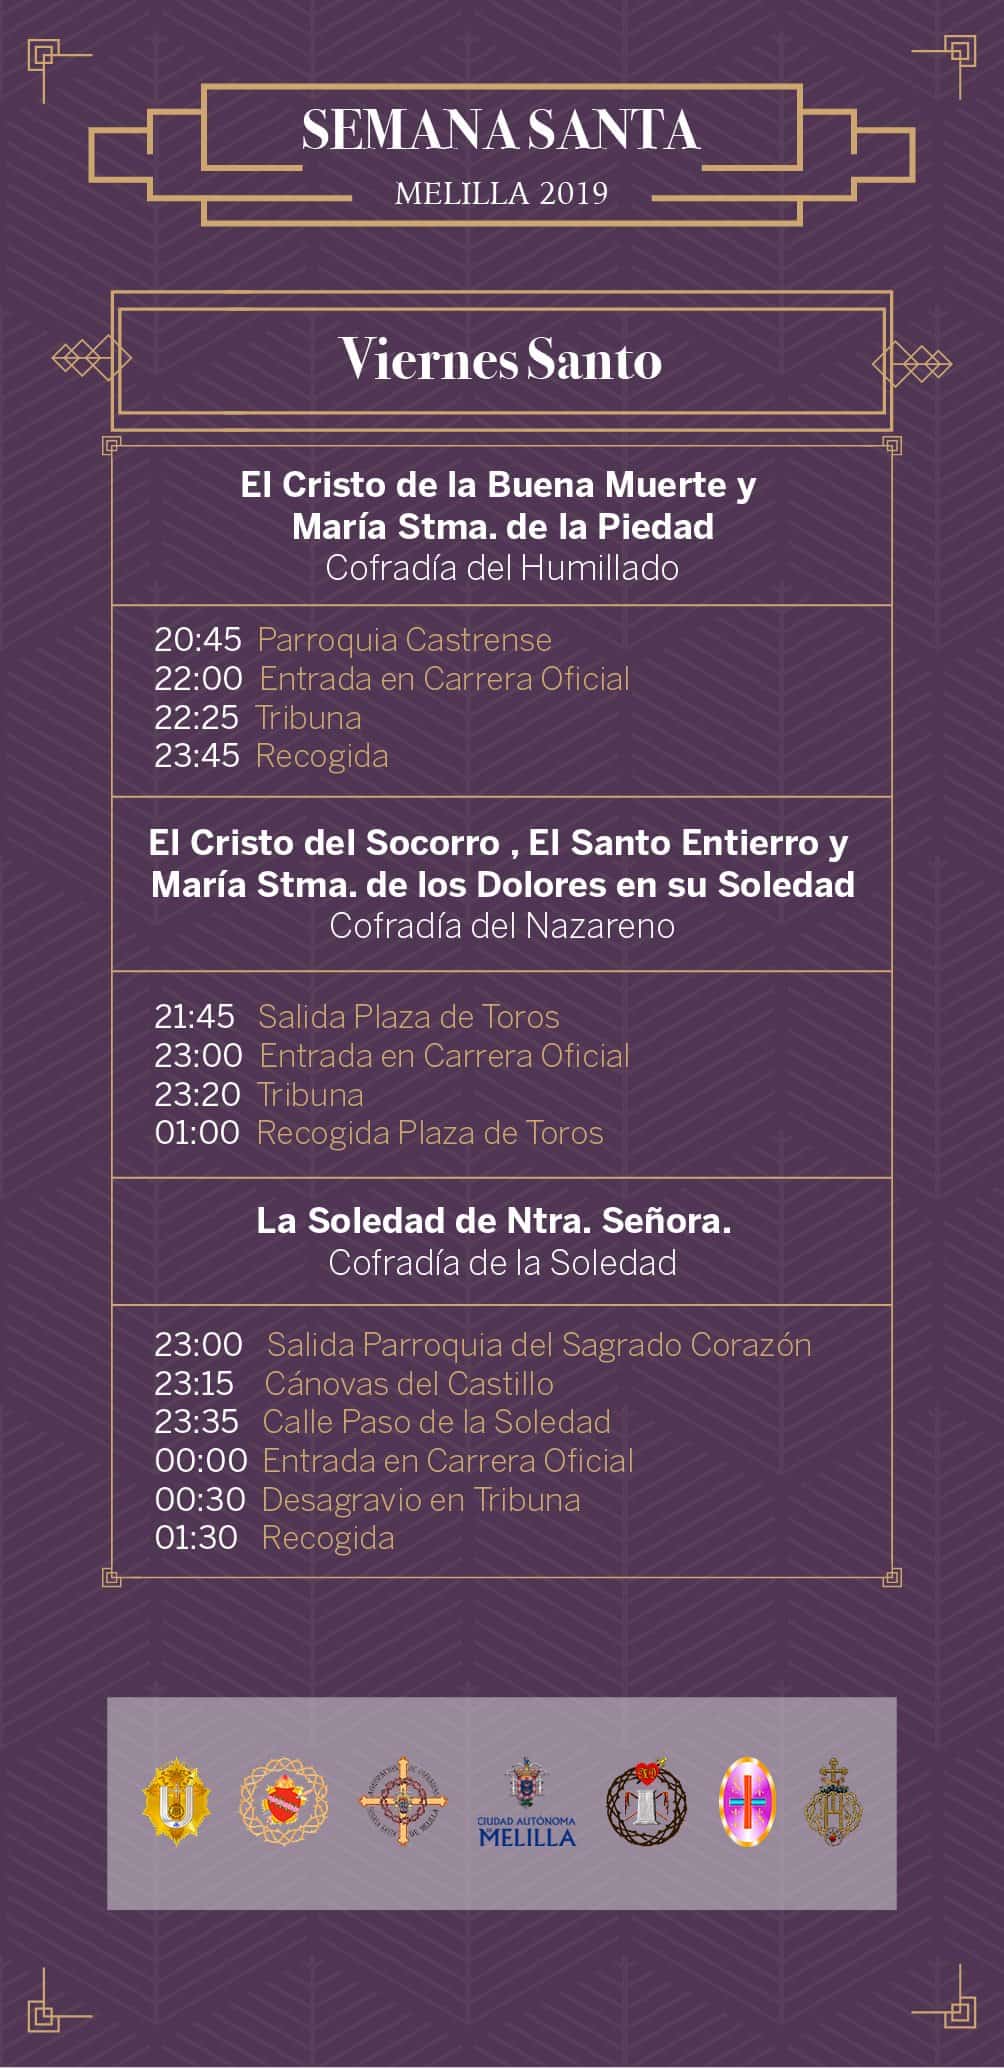 Viernes Santo Semana Santa Melilla 2019